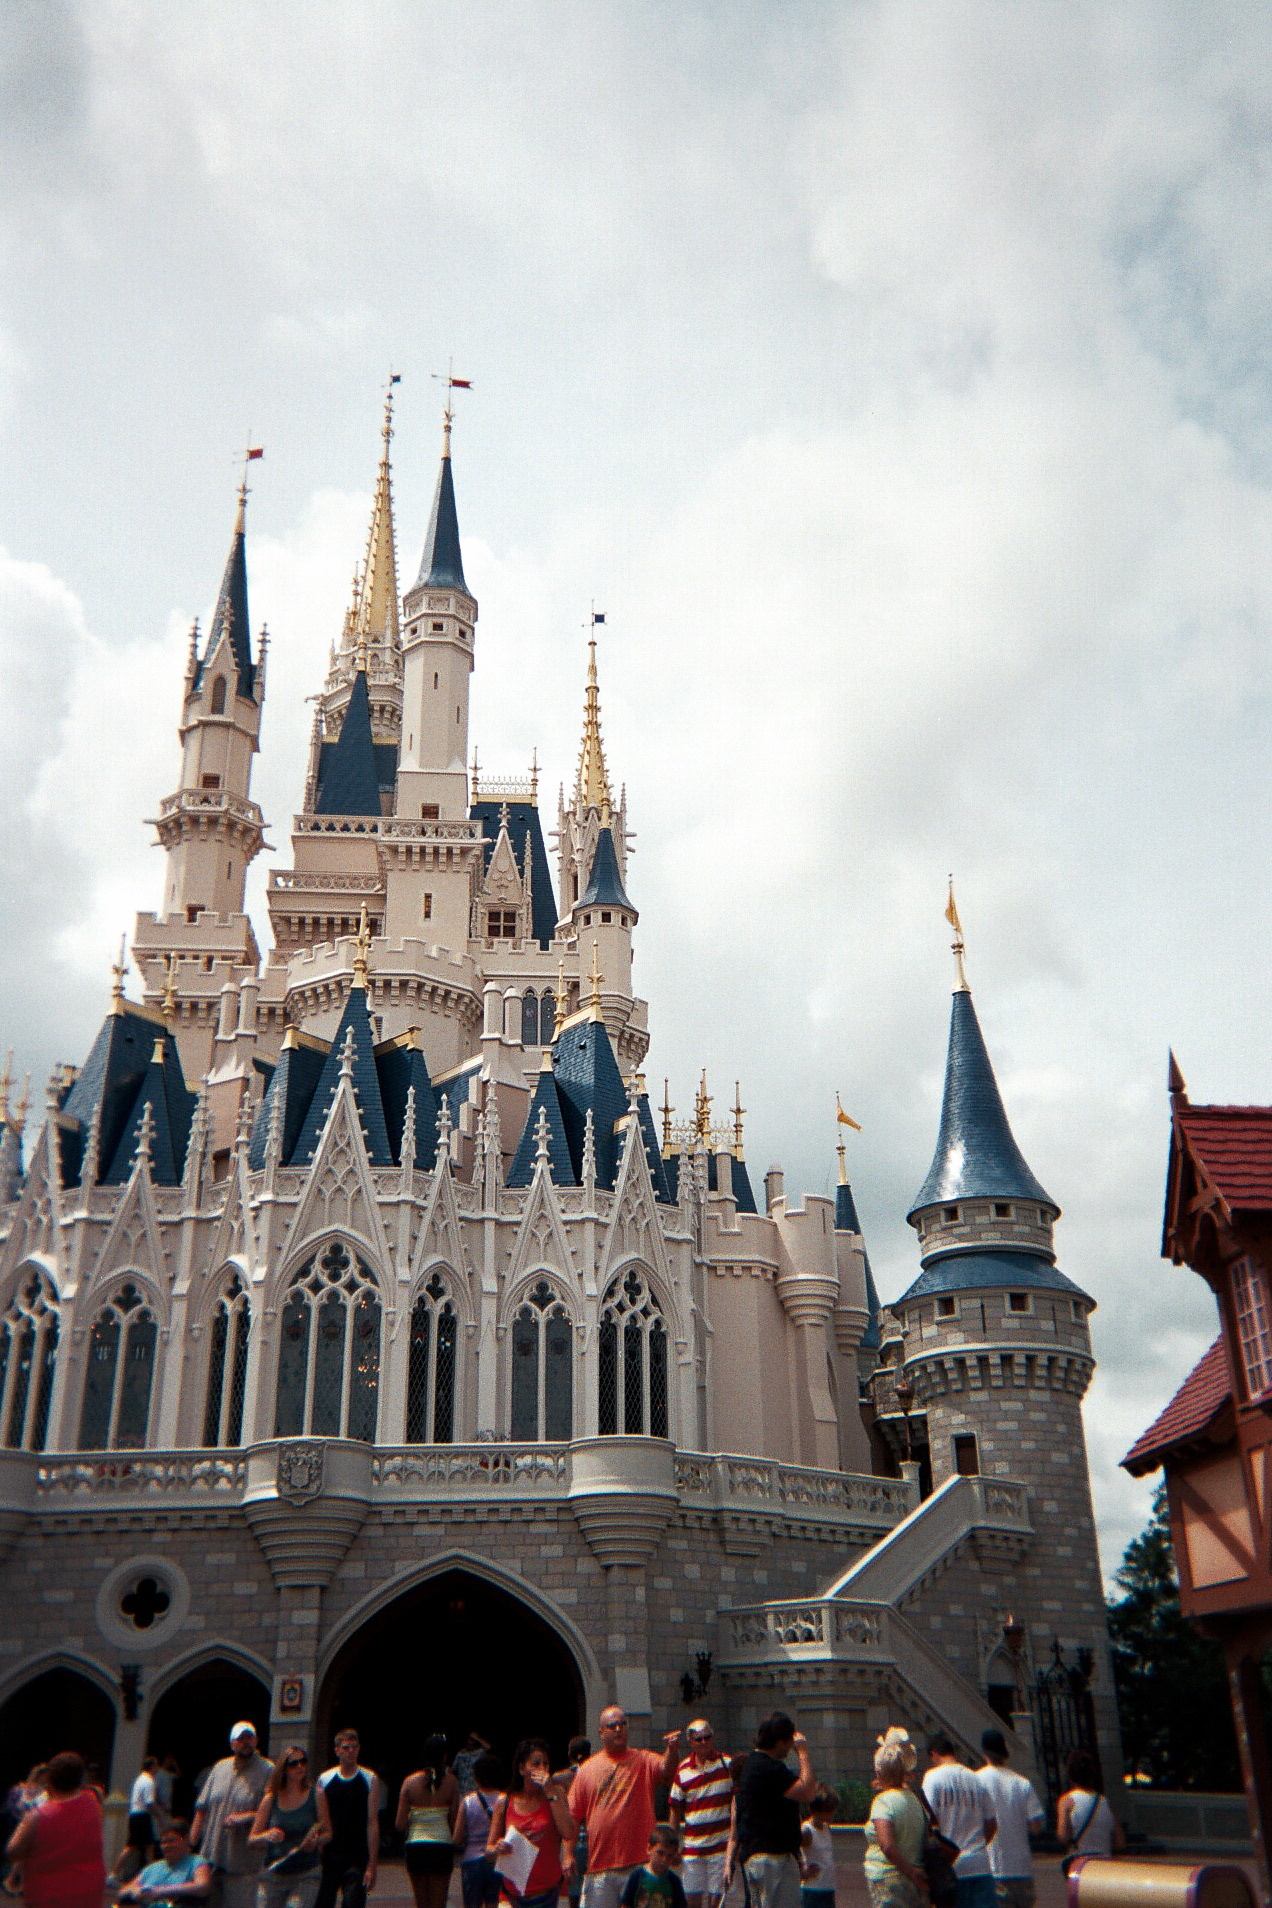 Cinderella's Castle view from Fantasyland